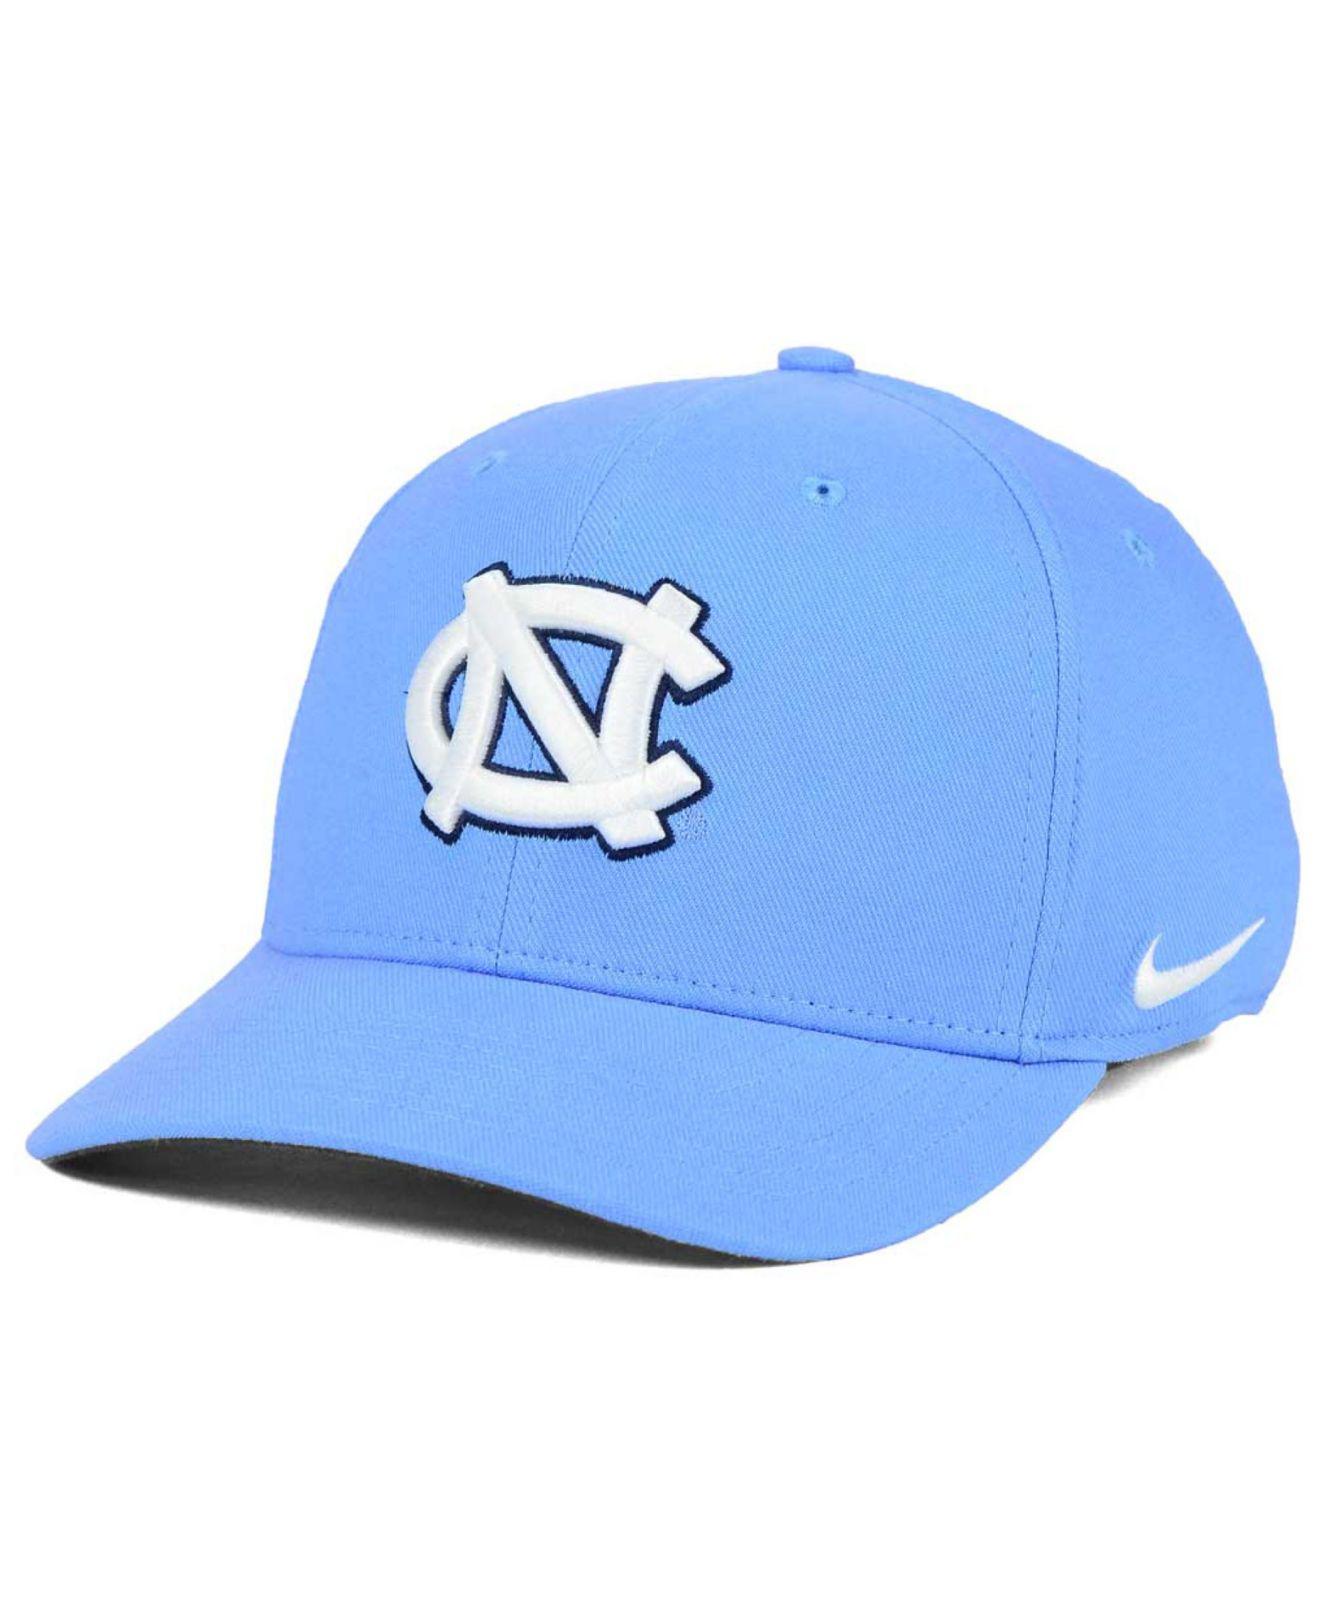 Lyst - Nike North Carolina Tar Heels Classic Swoosh Cap in Blue for Men